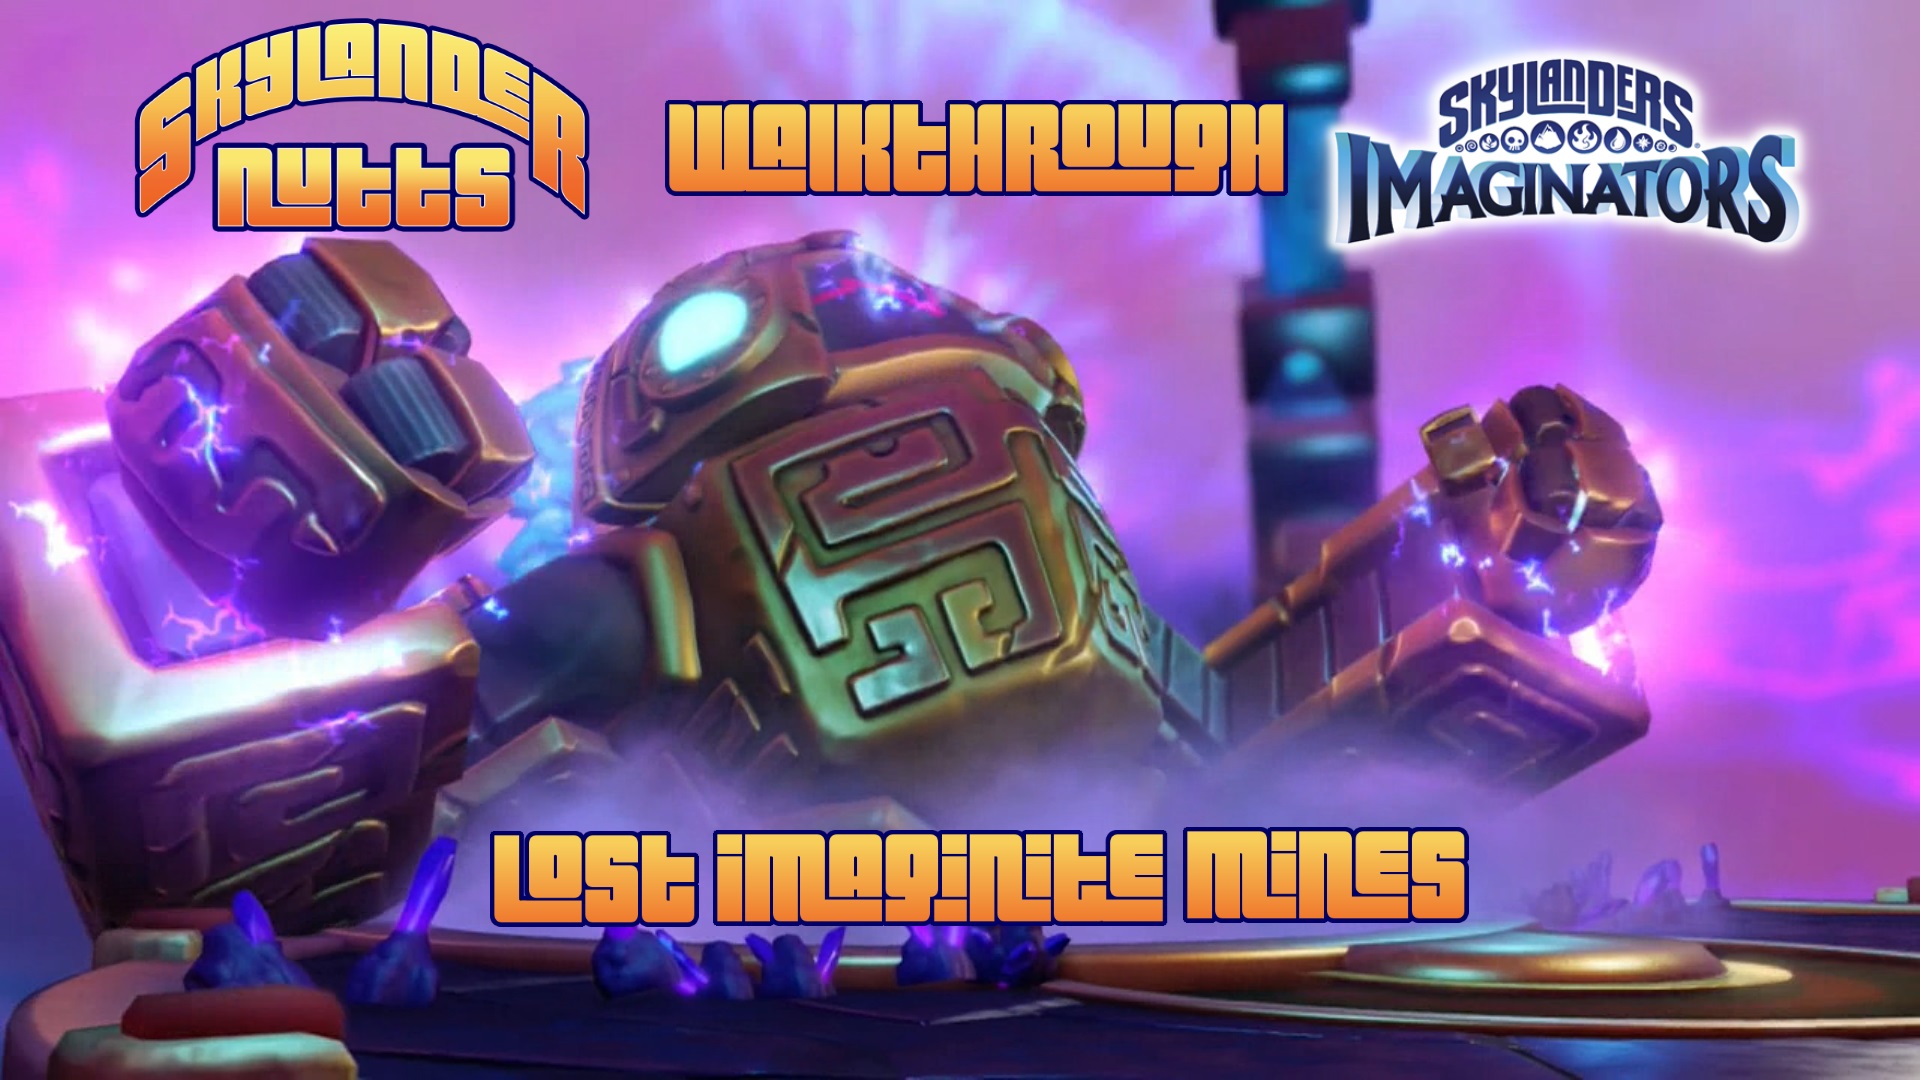 Imaginaotrs Walkthrough - Lost Imaginite Mines